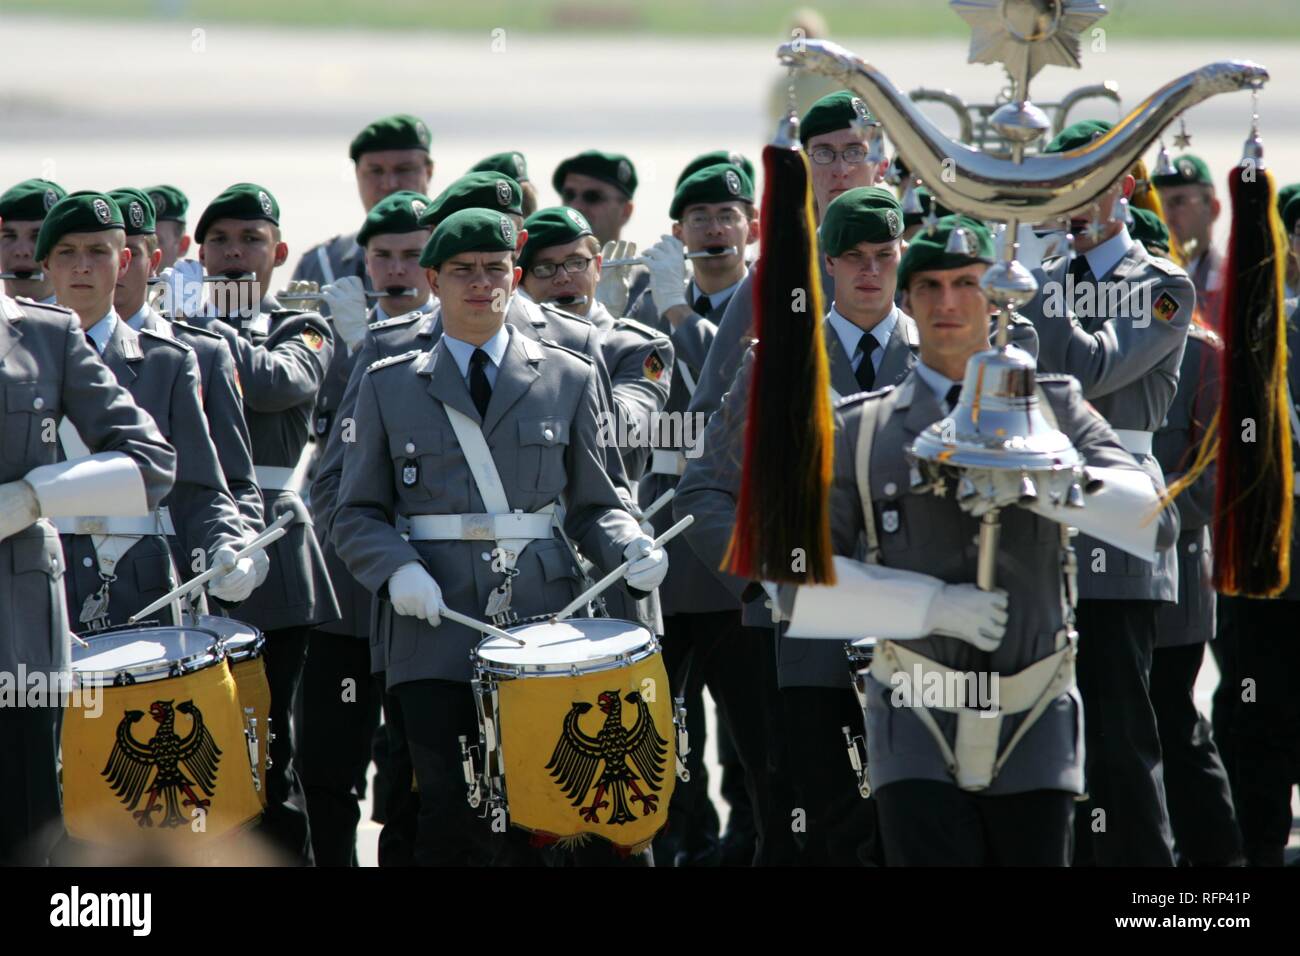 Wachbataillon (Guard battalion) of the German Bundeswehr, airport Cologne-Bonn, North Rhine Westphalia, Germany Stock Photo